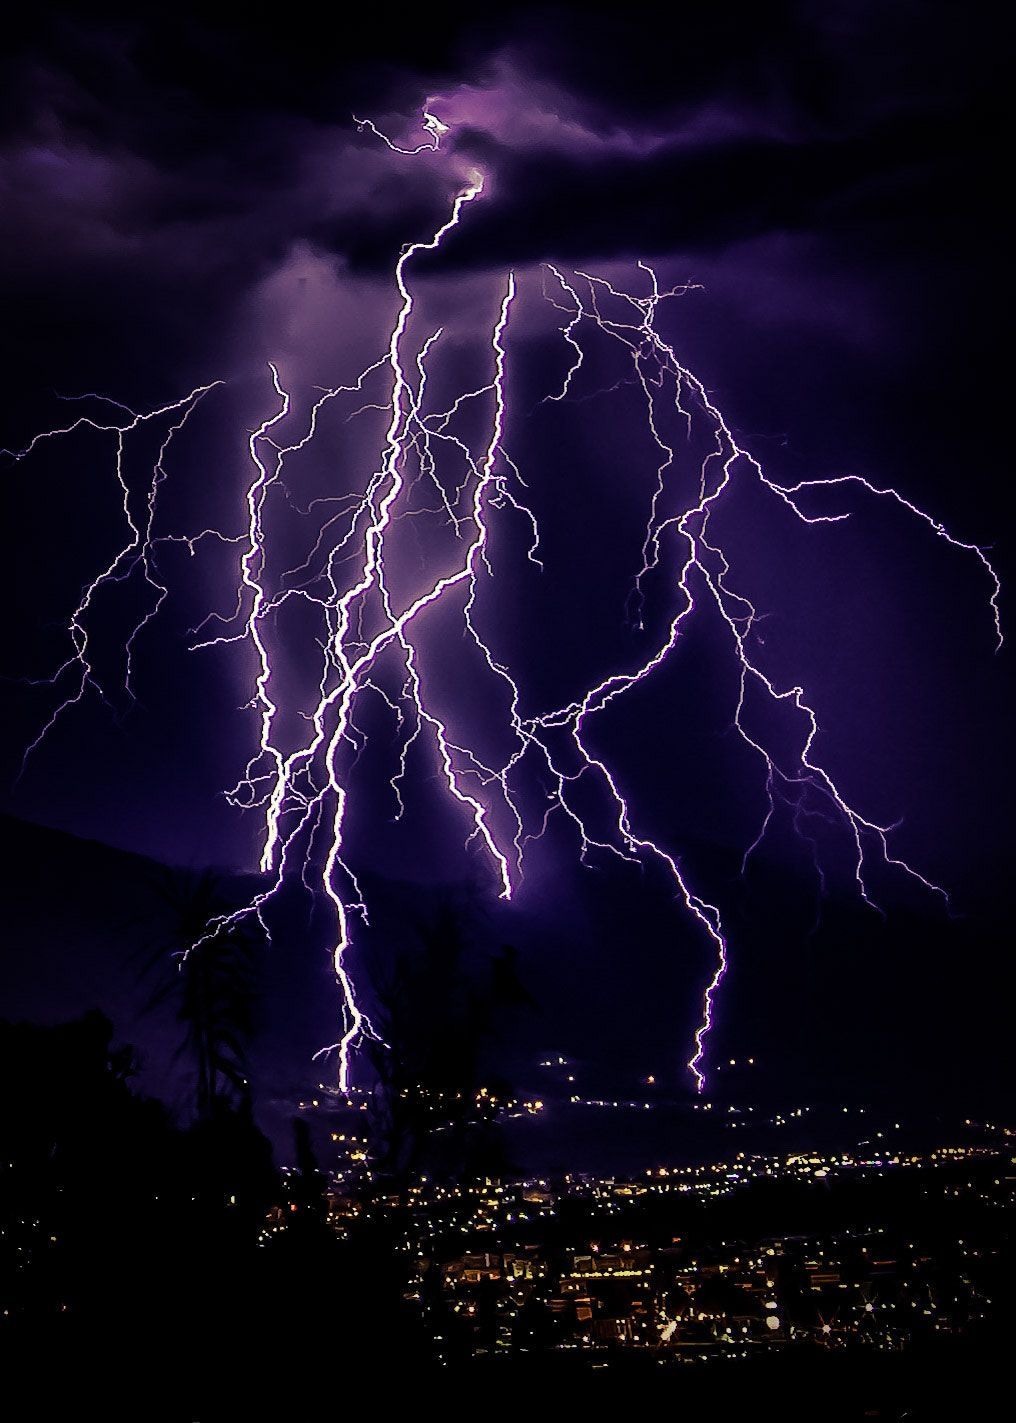 Lightning strikes in the sky over a city at night. - Lightning